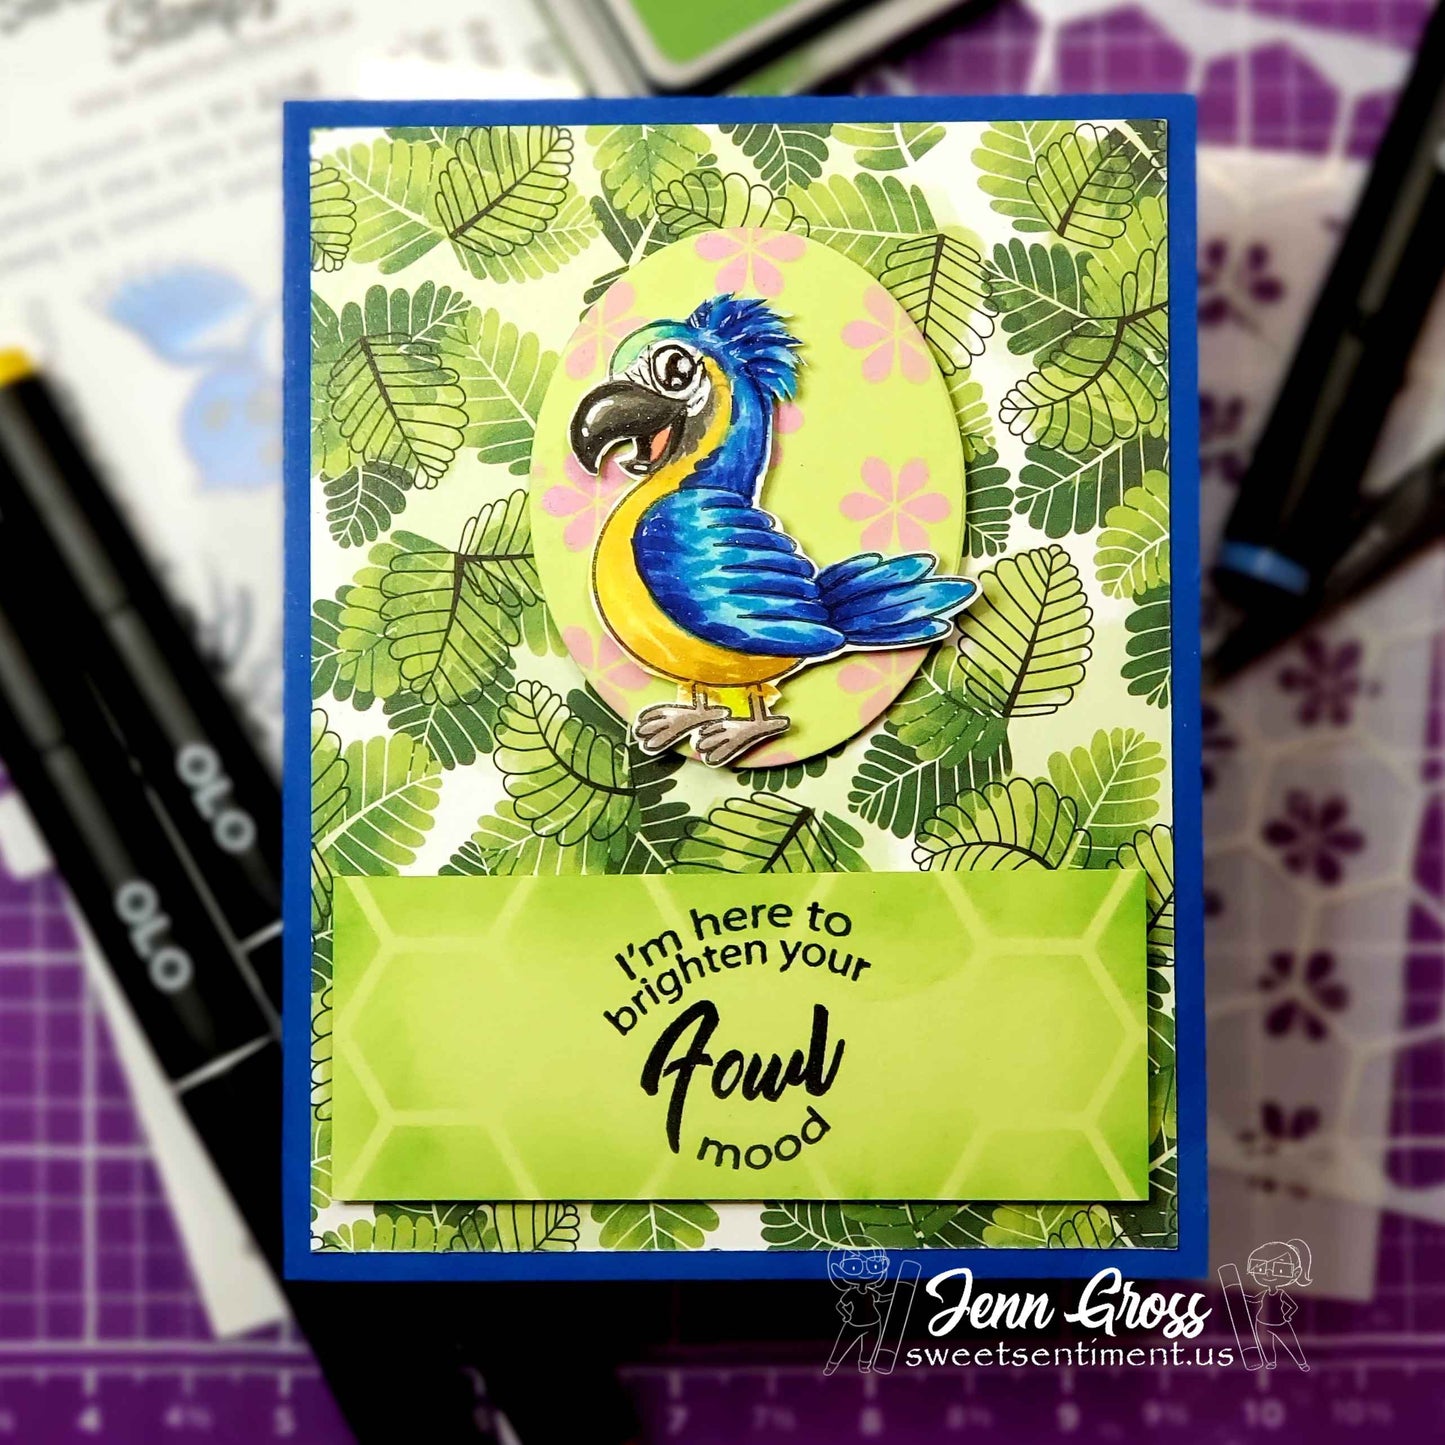 Bird Joy Stamp Set